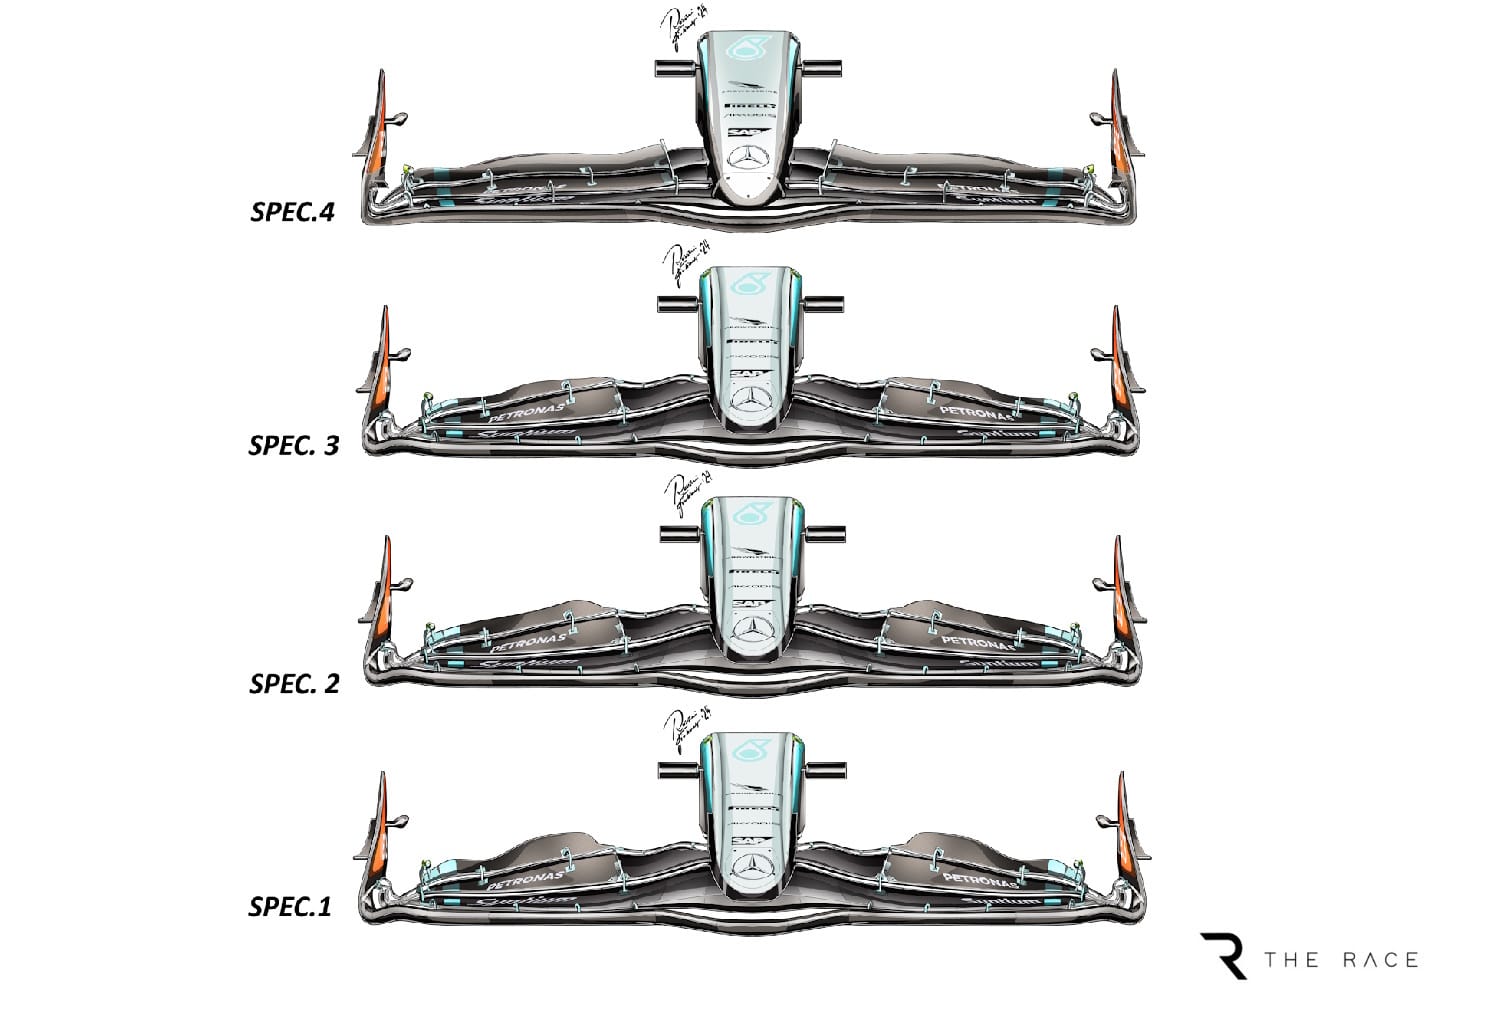 Mercedes F1 front wing comparison